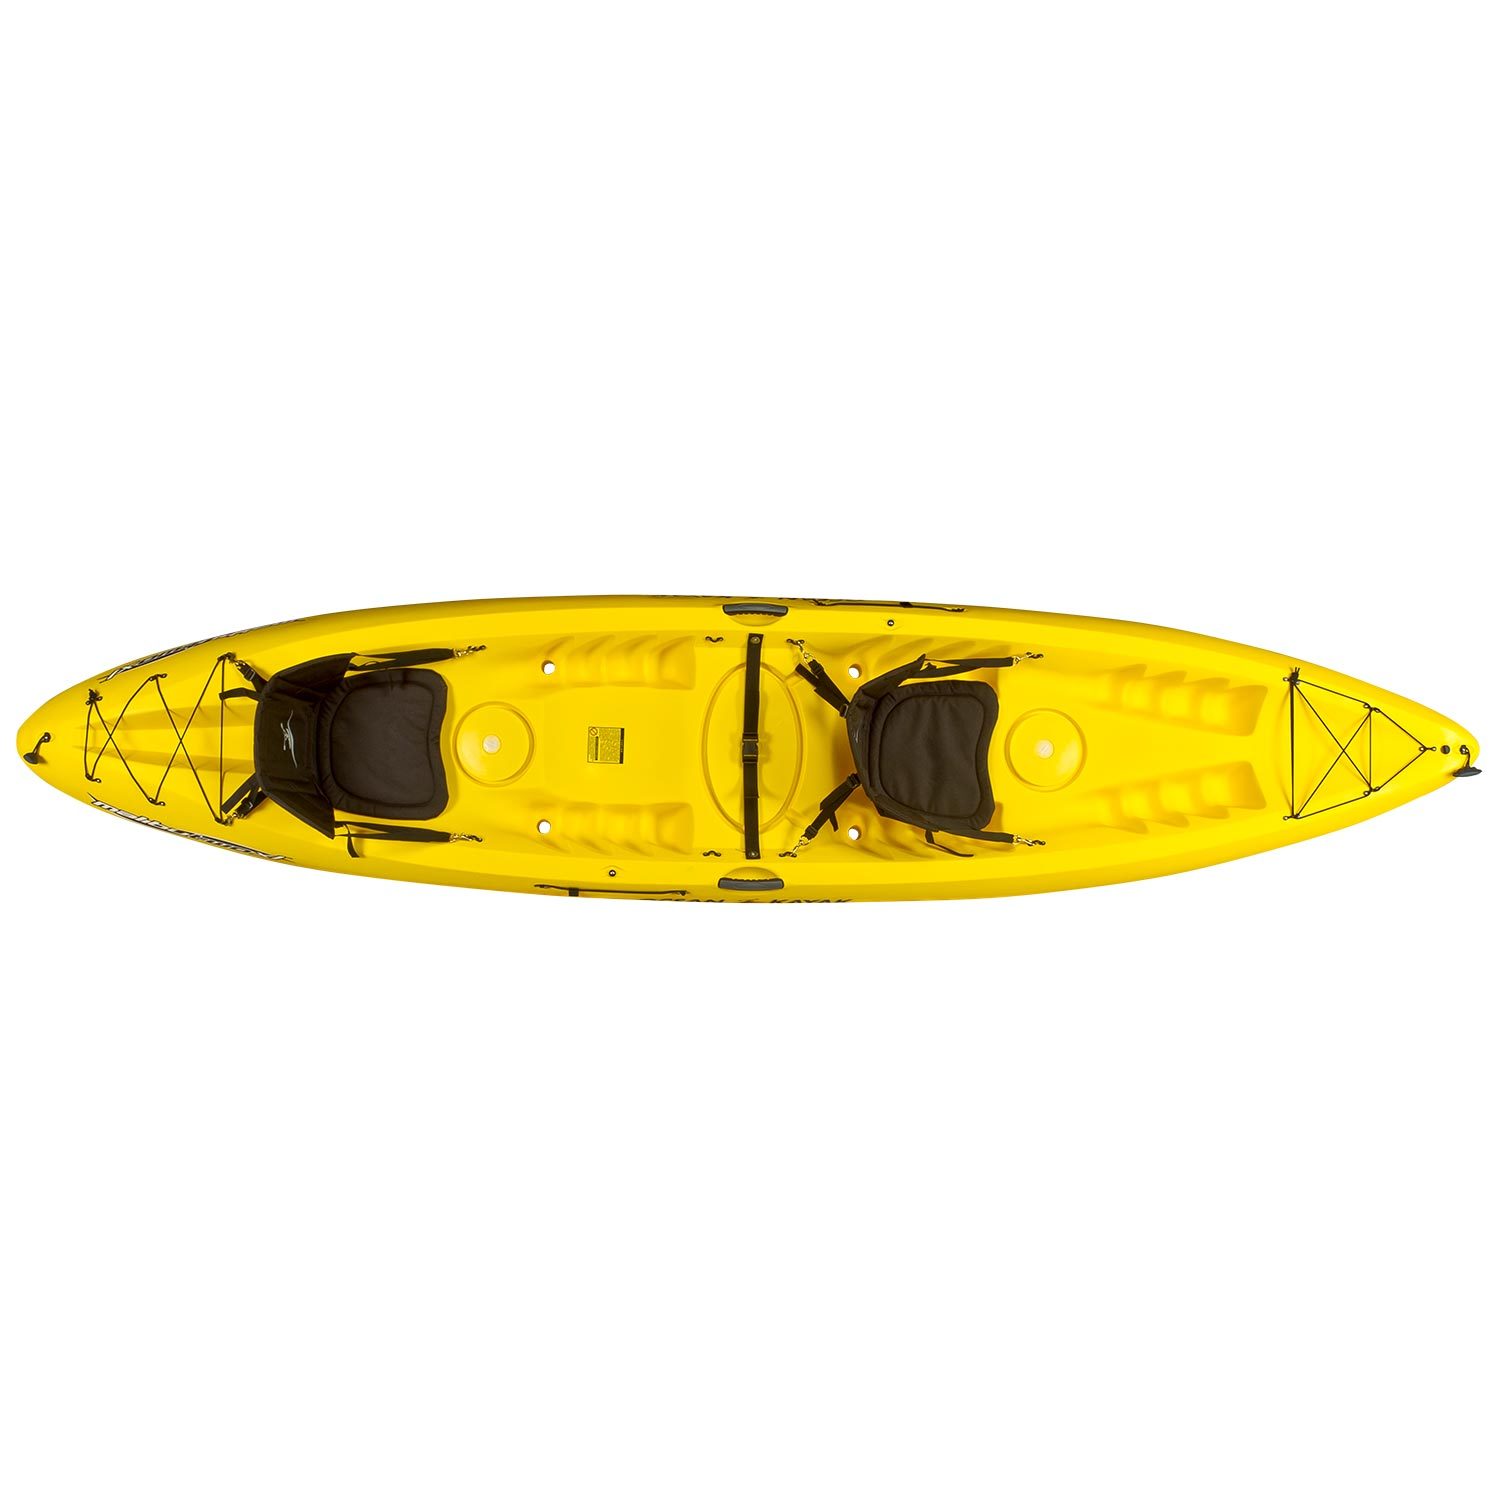 OCEAN KAYAK 13'4 Malibu Two XL Tandem Plus Kayak